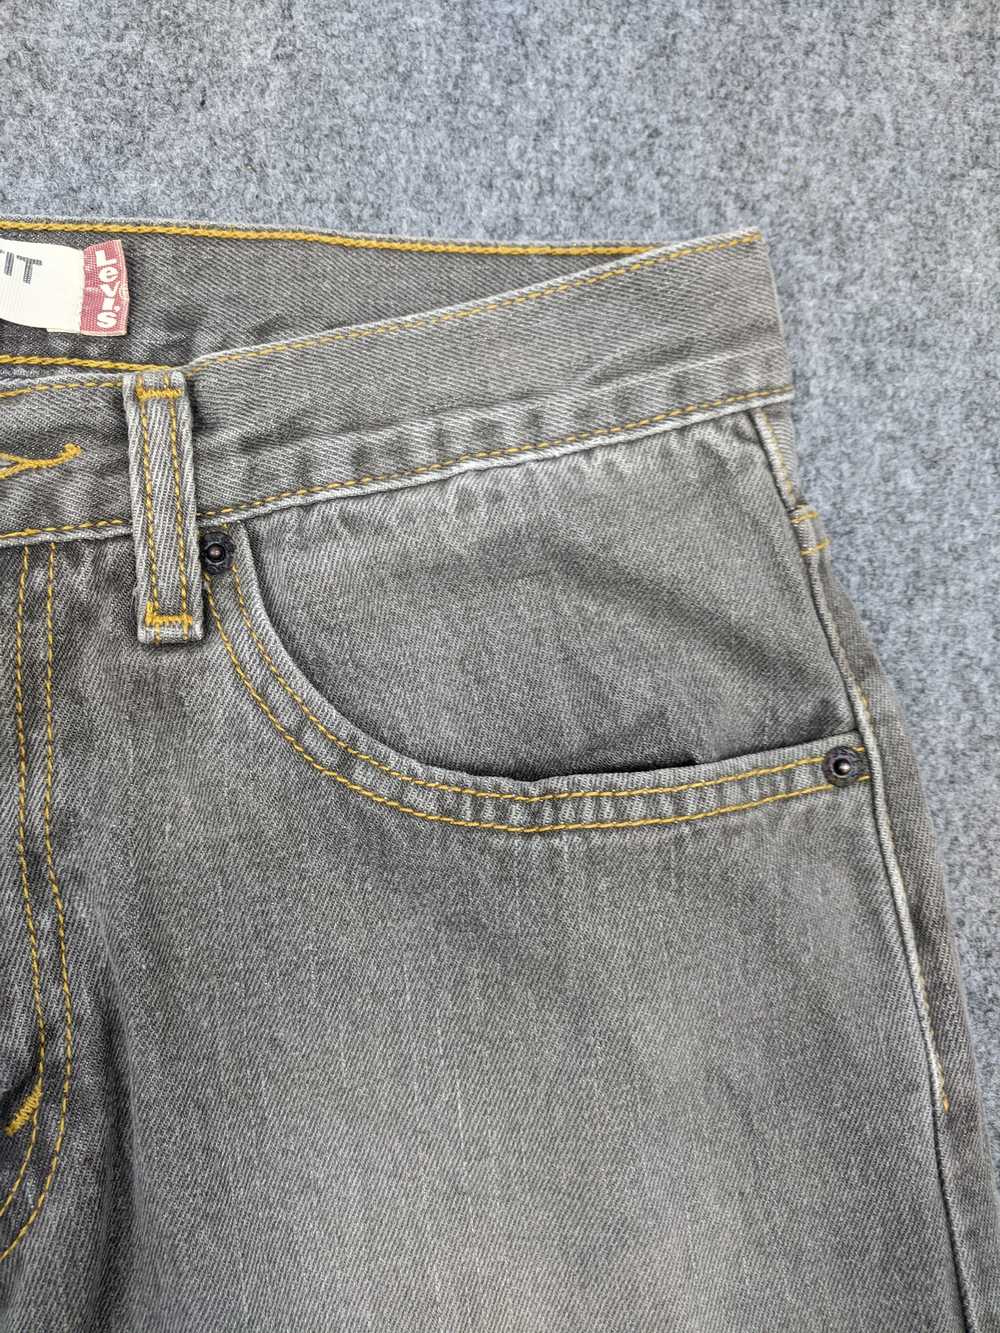 Vintage - Vintage Sun Faded Black Levis 505 Jeans - image 5